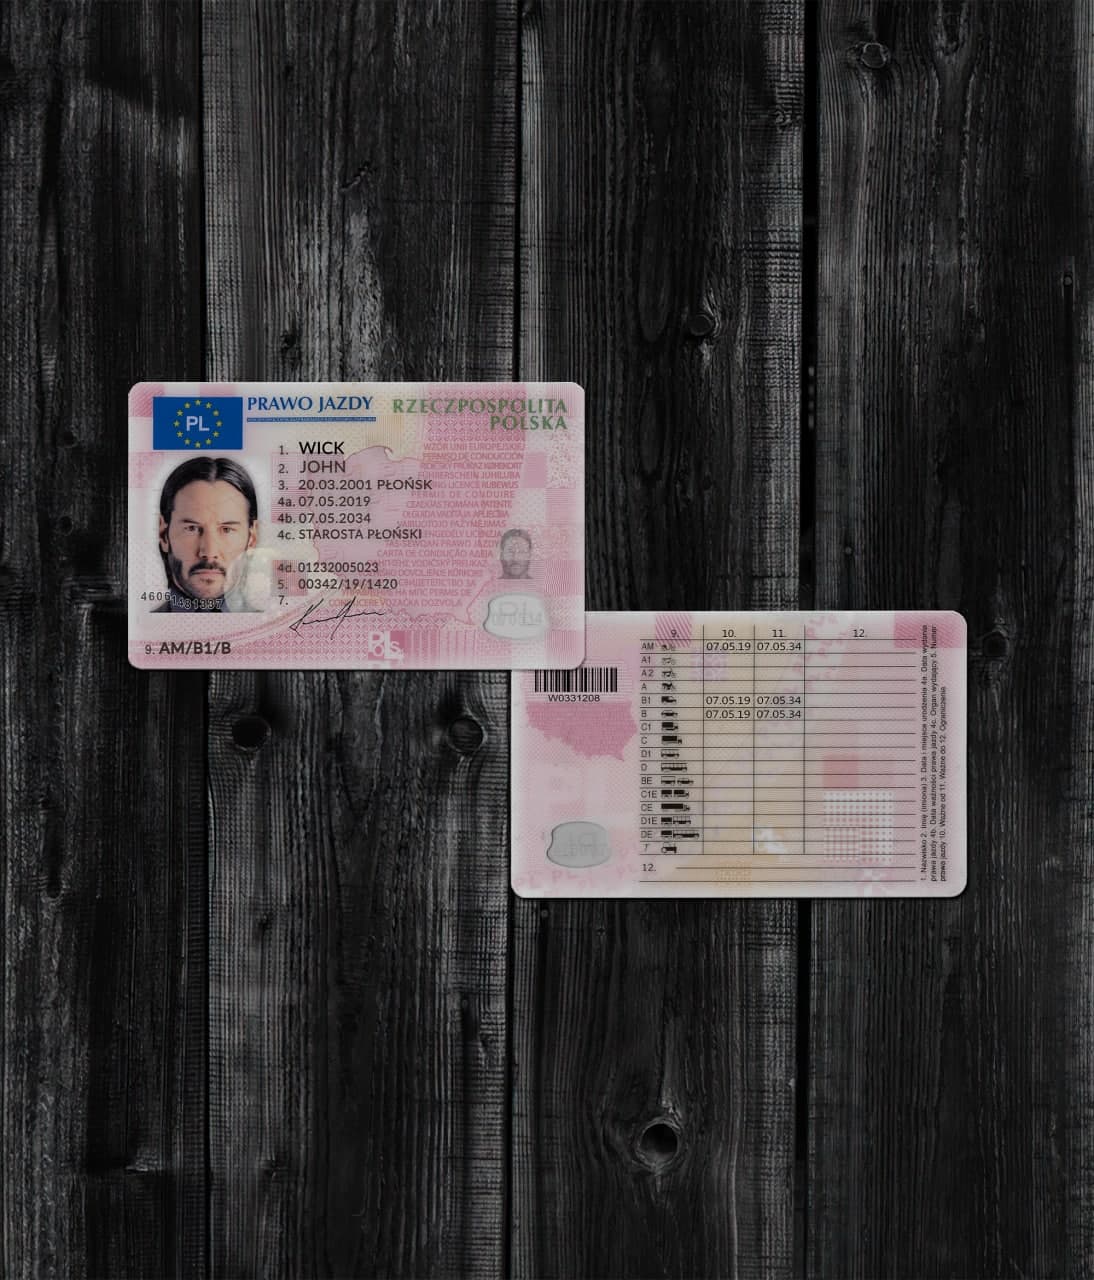 Poland Driver License 2019+2